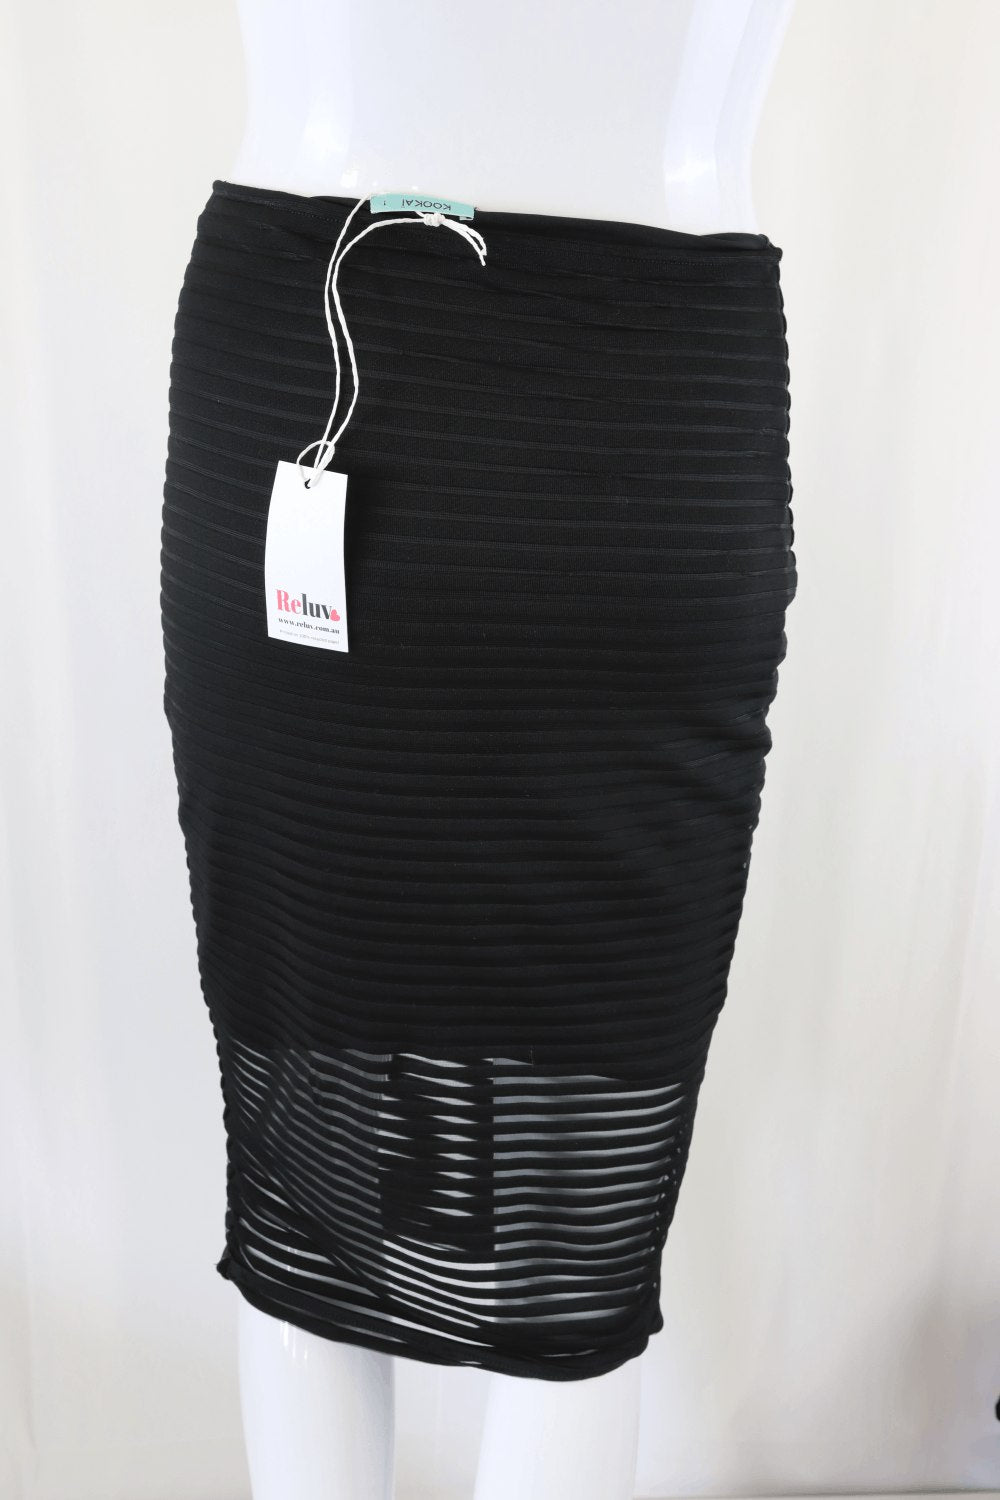 Kookai Black Sheer Skirt 8